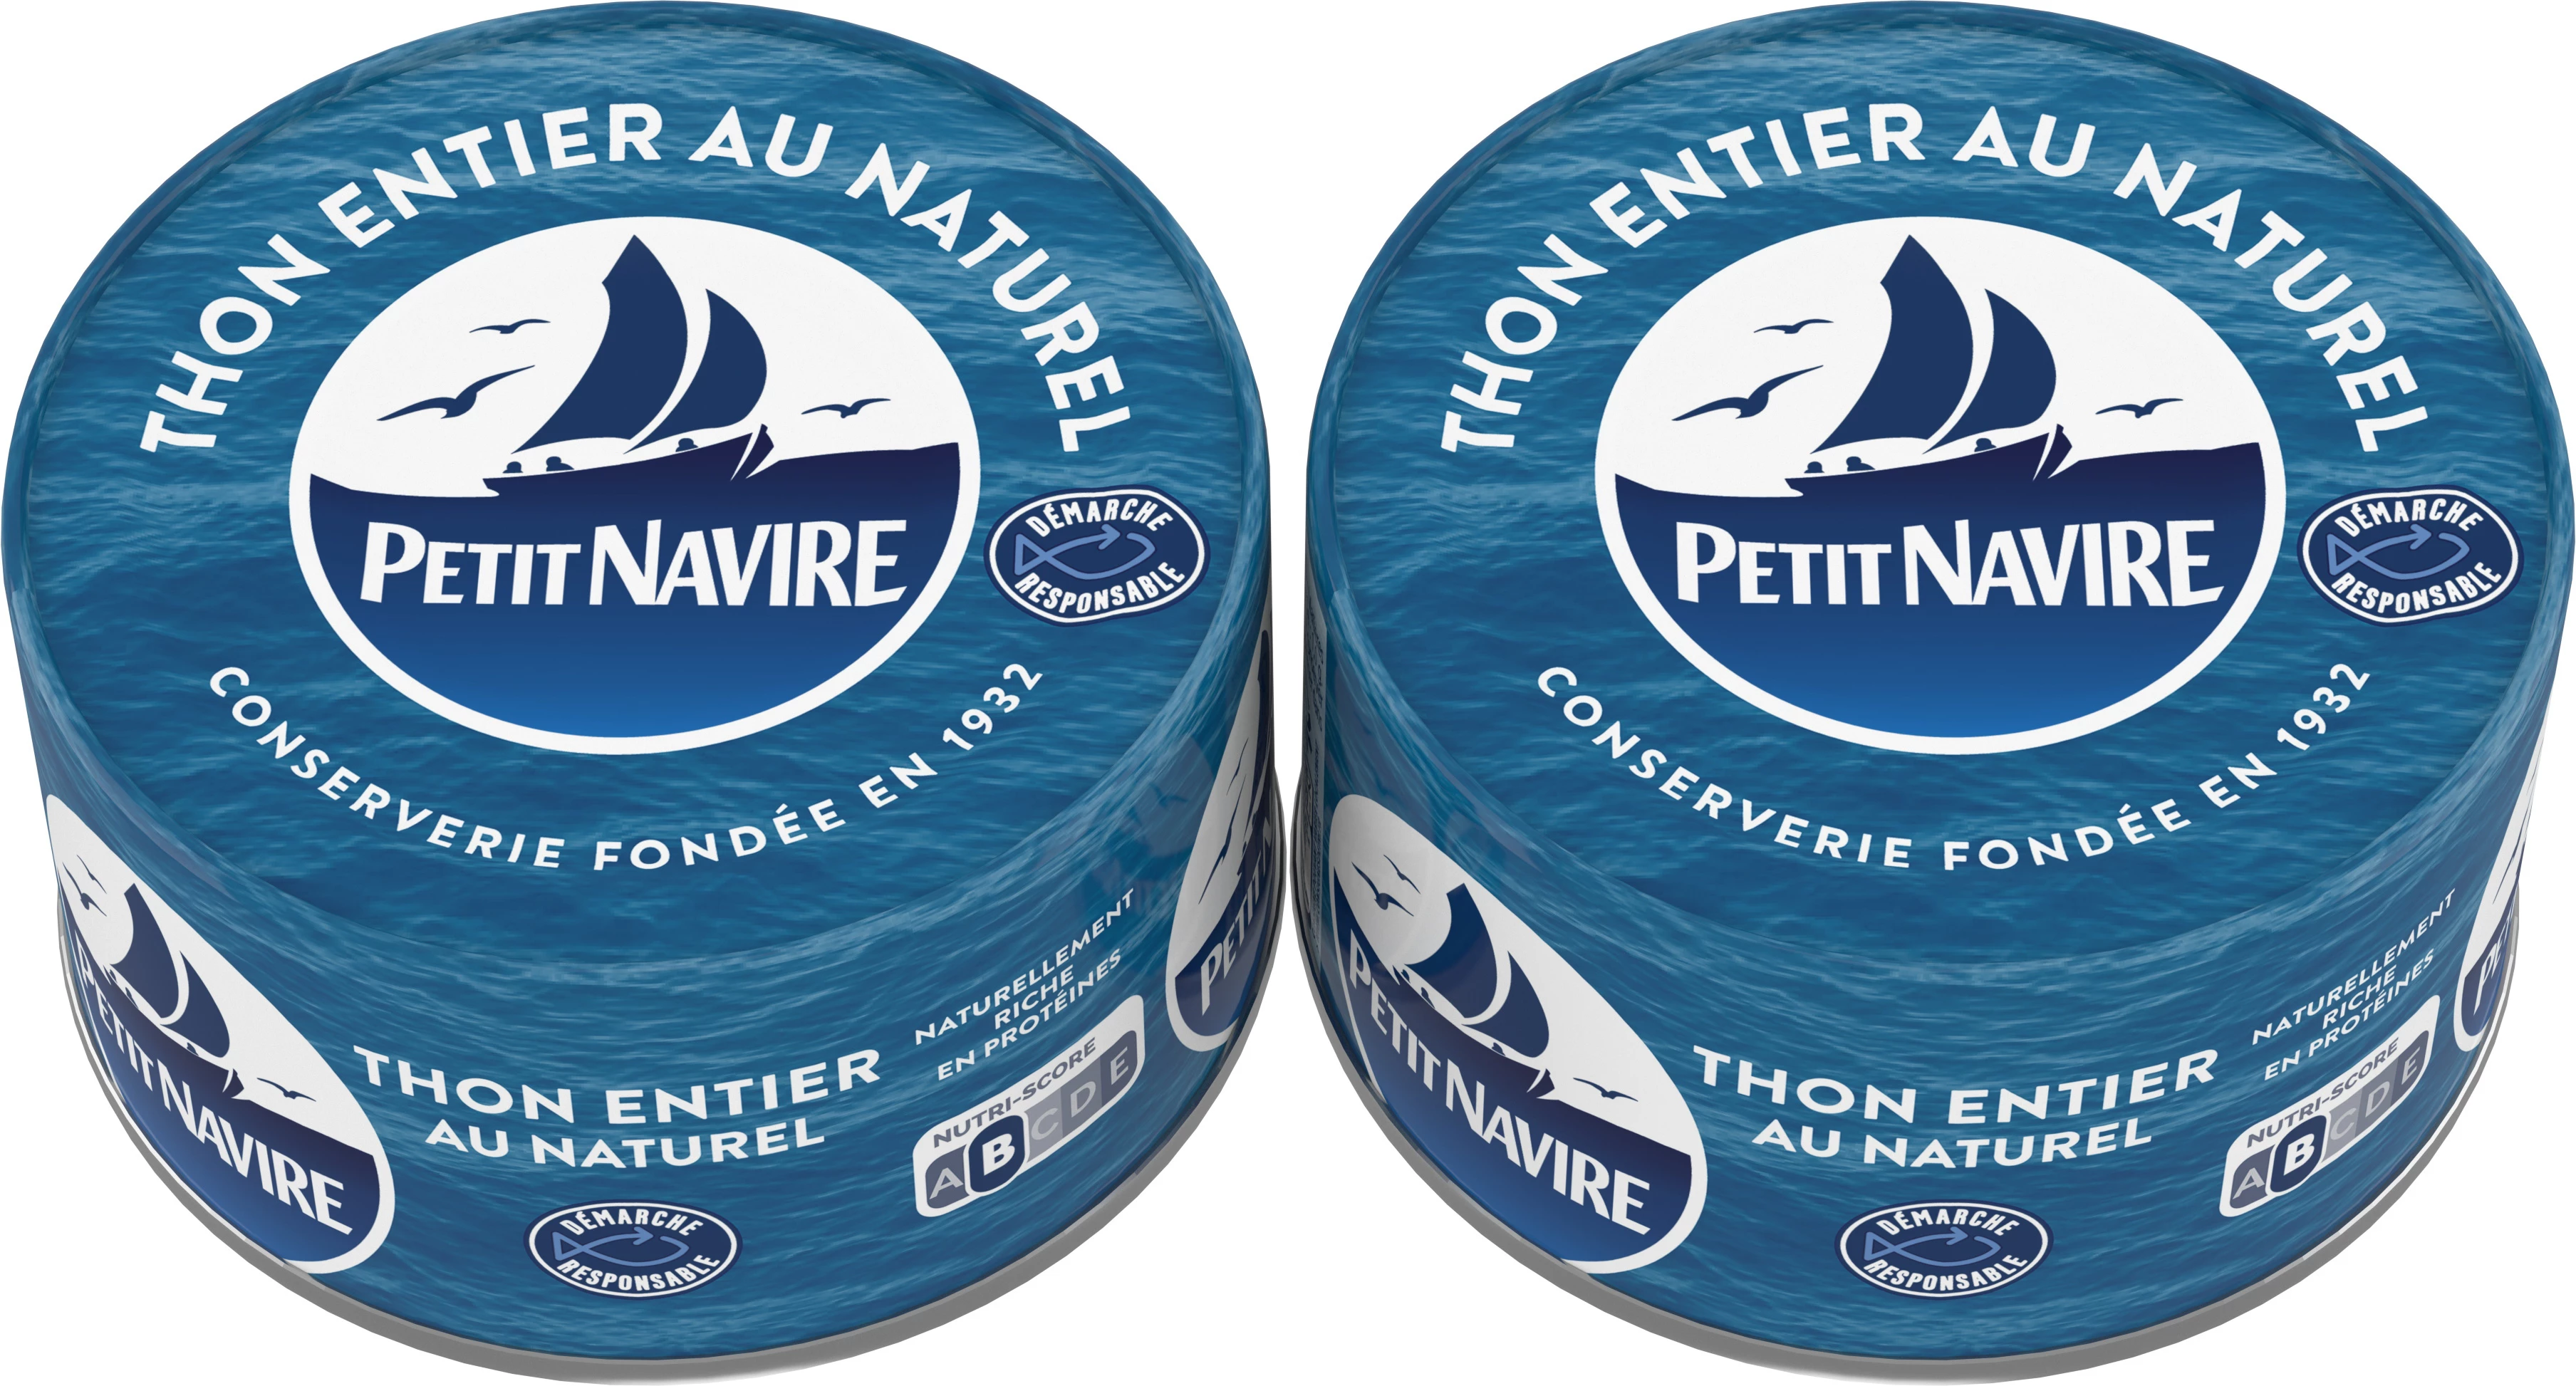 Natuurlijke tonijn, 2x93g - PETIT NAVIRE